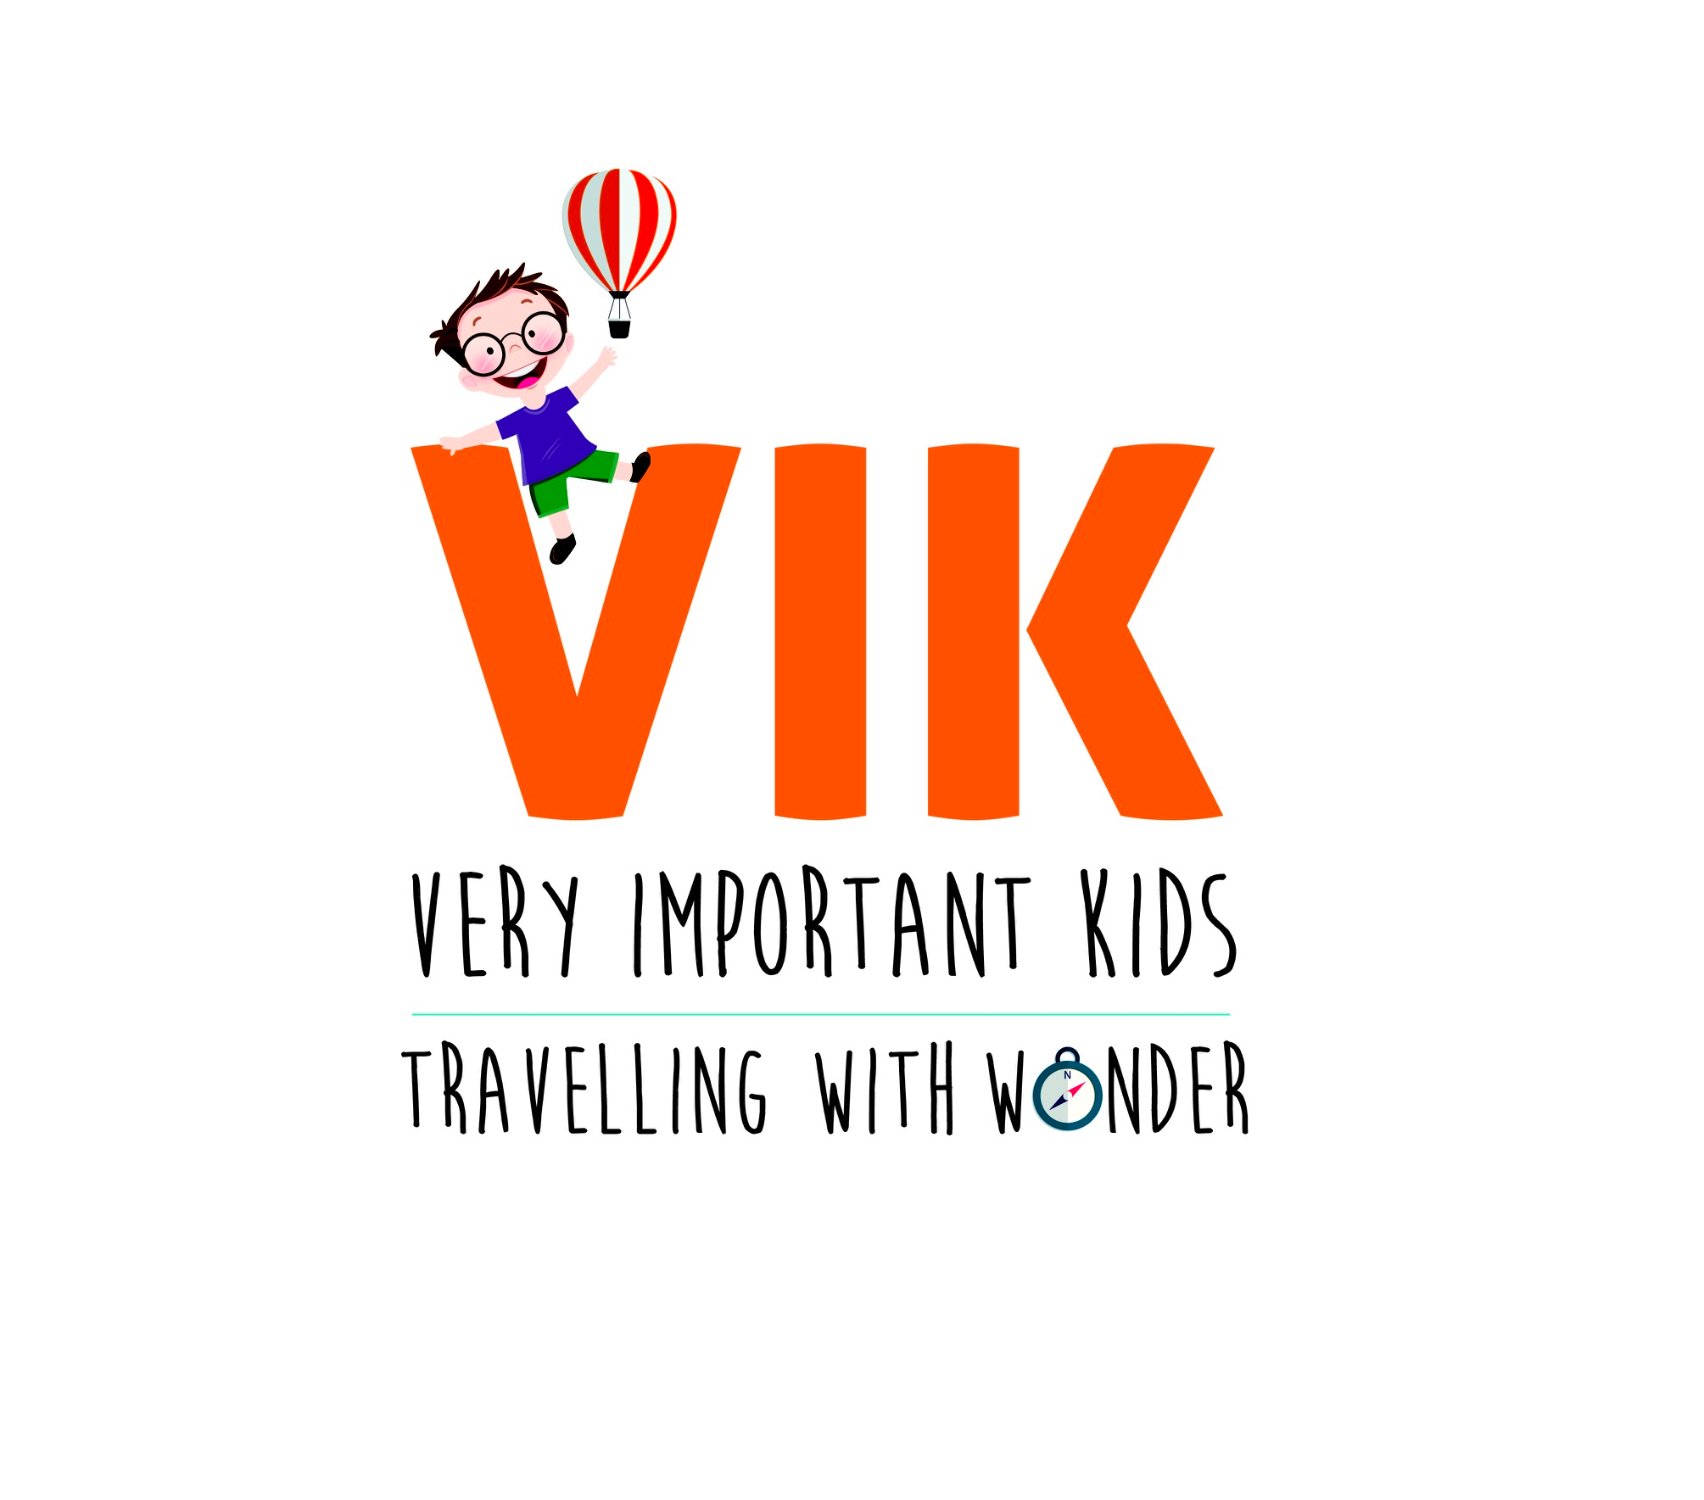 VIK - Very Important Kids